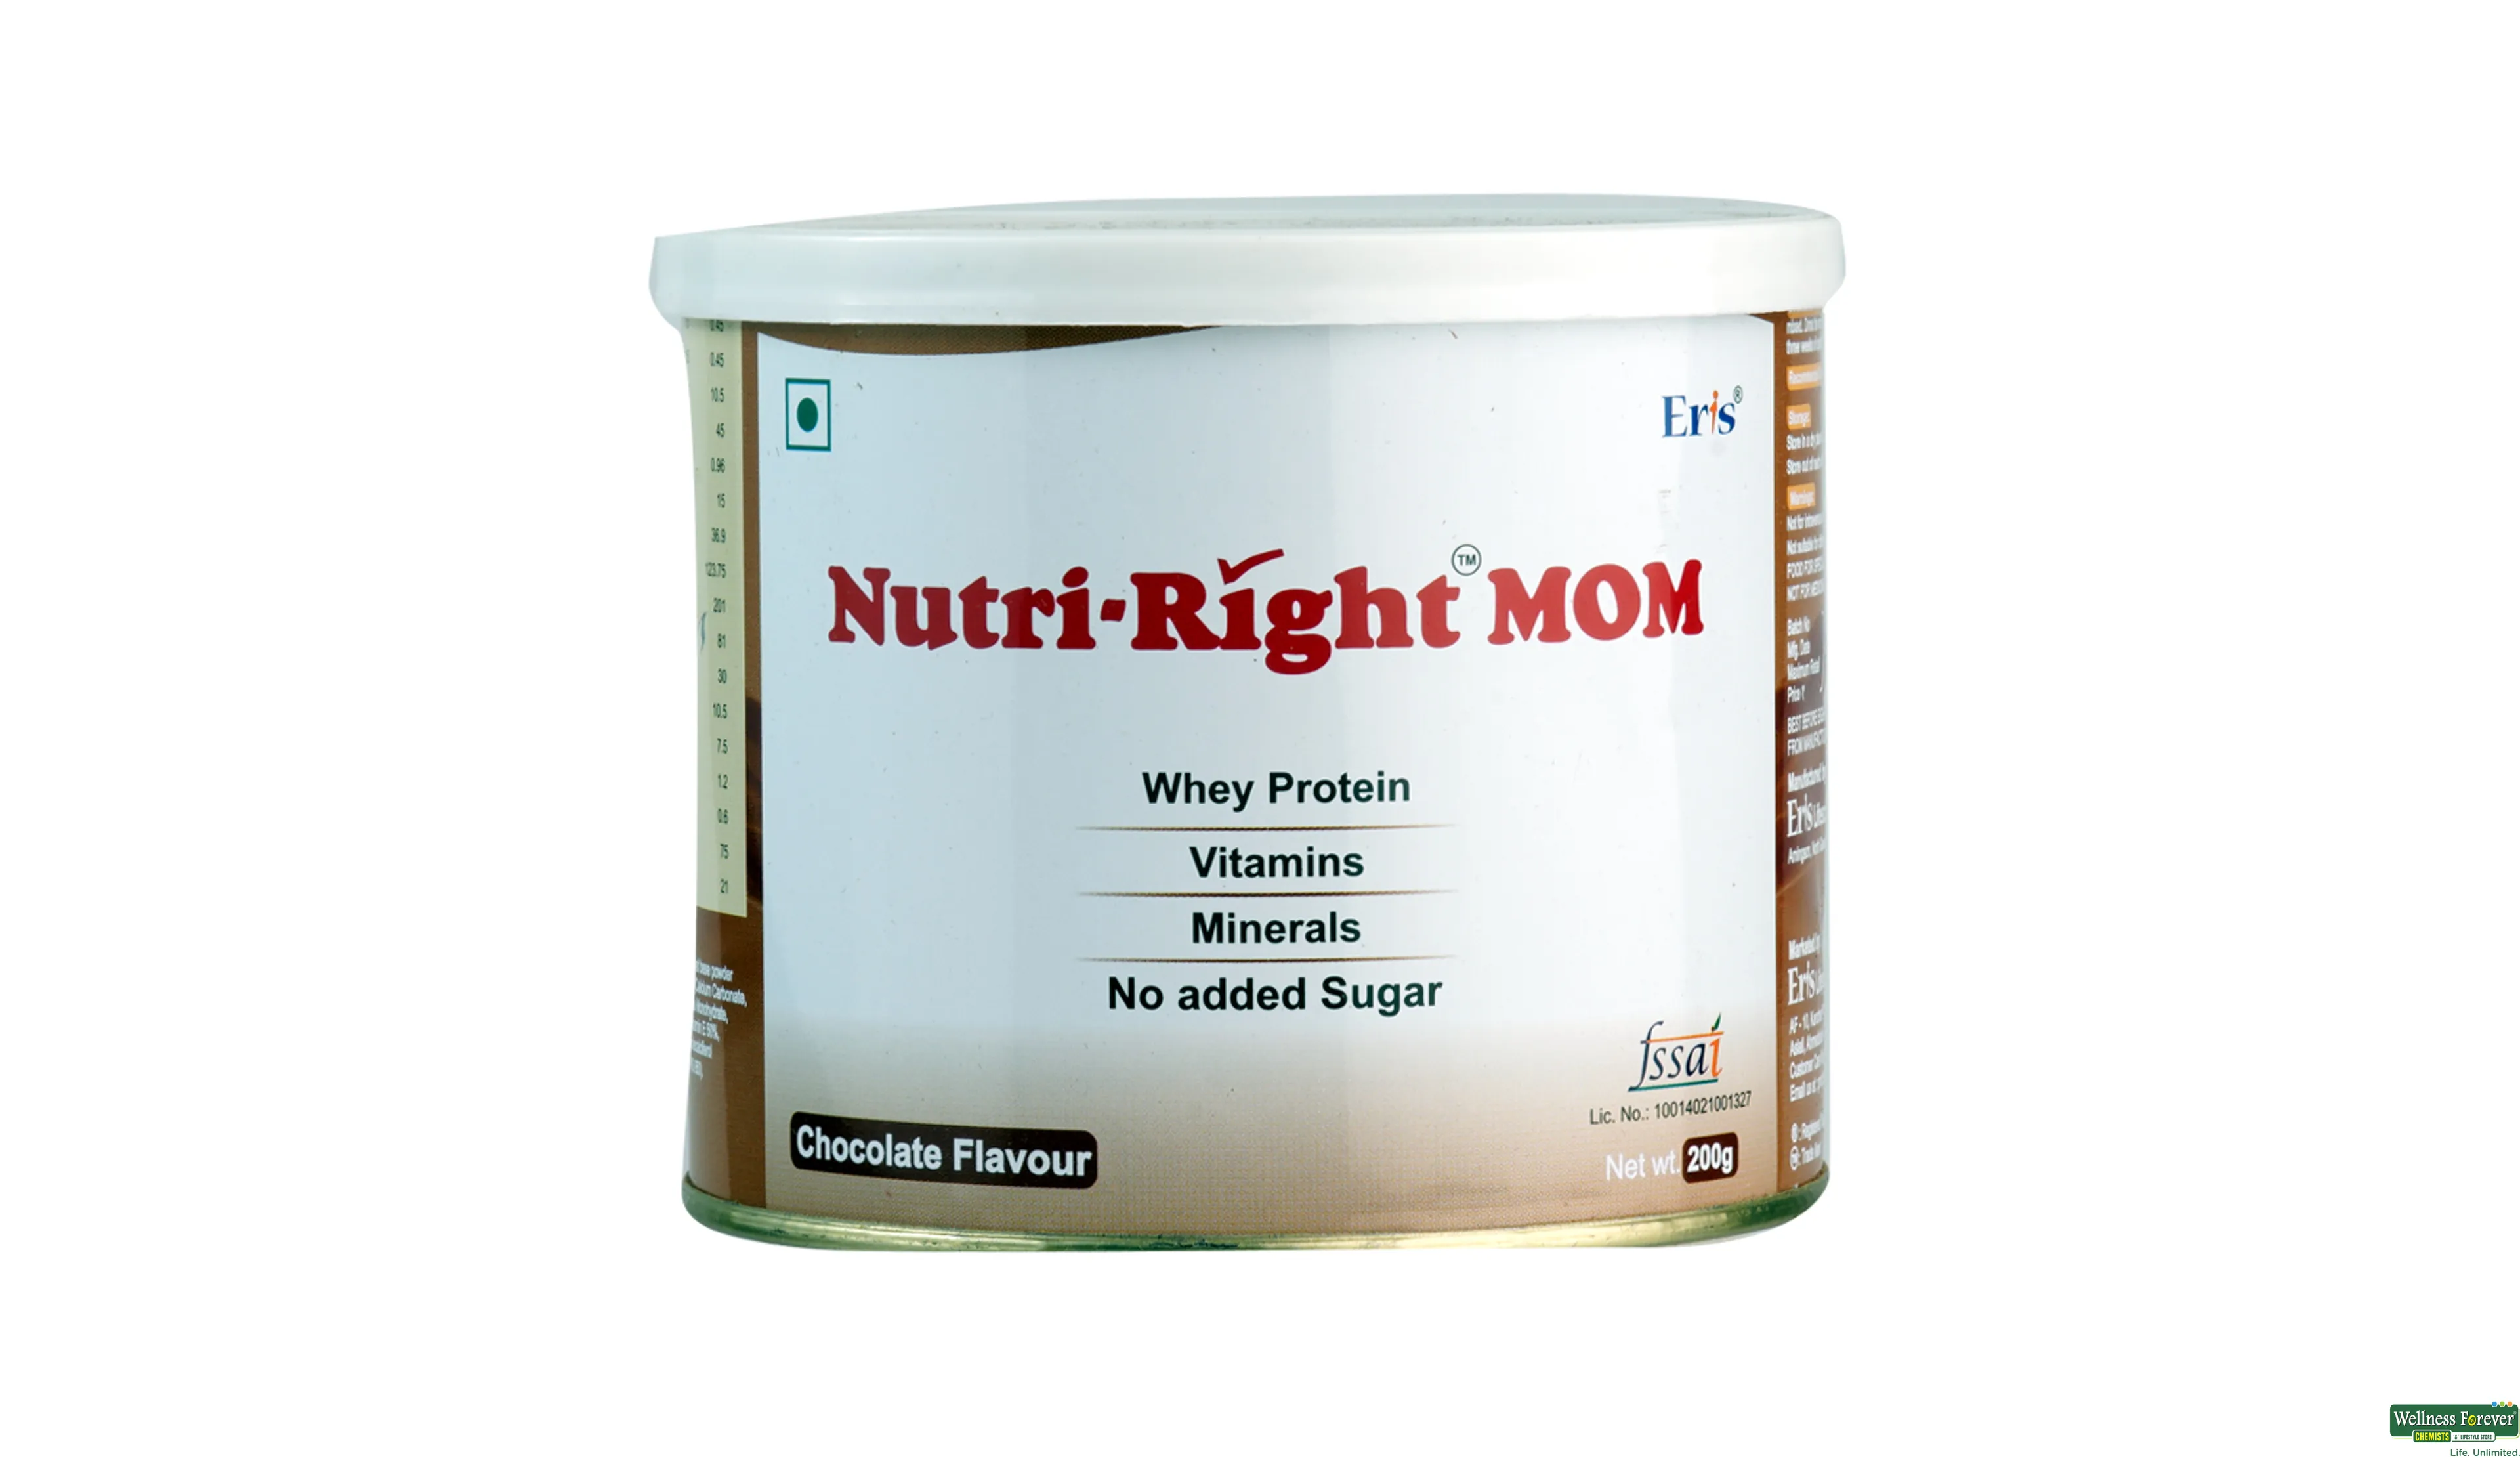 NUTRIRIGHT-MOM S/F CHOC POW 200GM- 1, 200GM, 